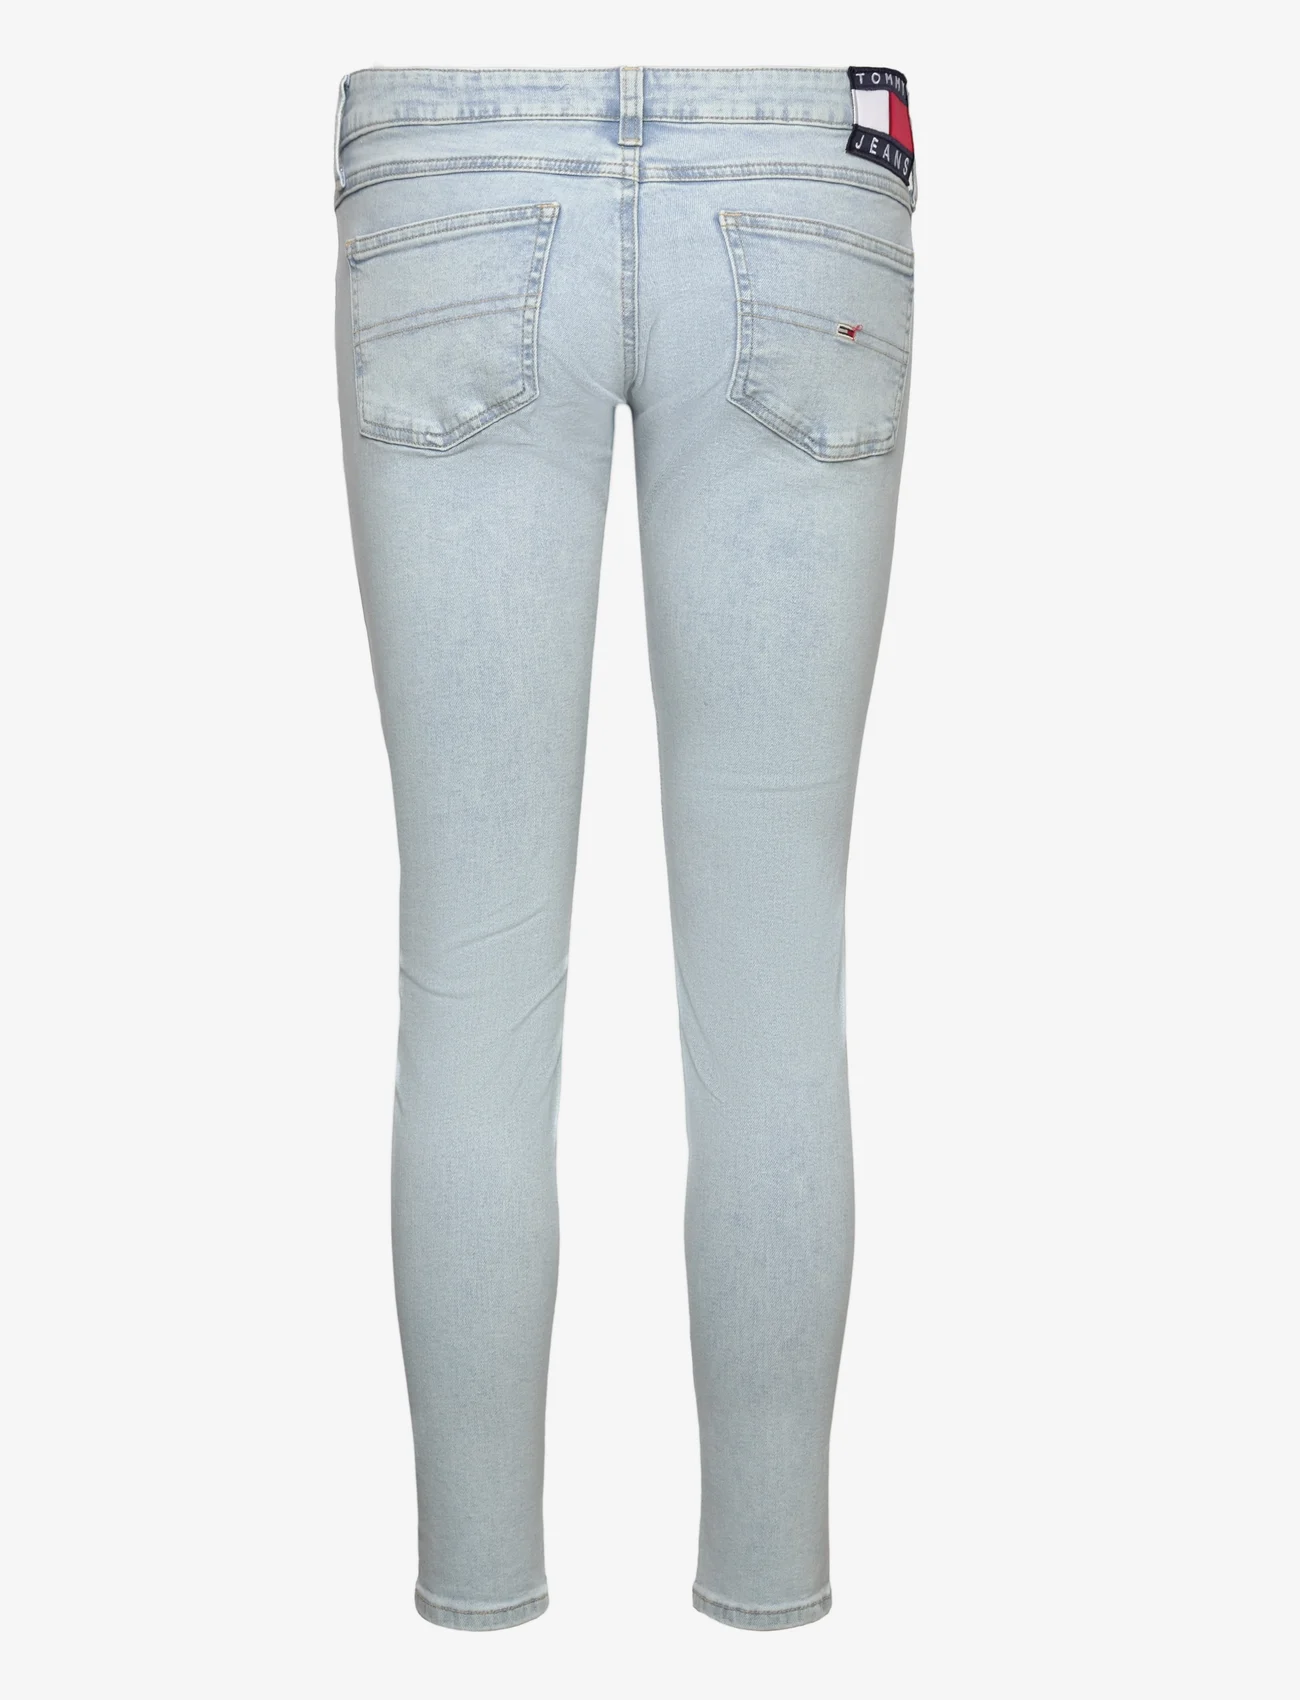 Tommy Jeans - SOPHIE LR SKINNY BG4216 - skinny jeans - denim light - 1